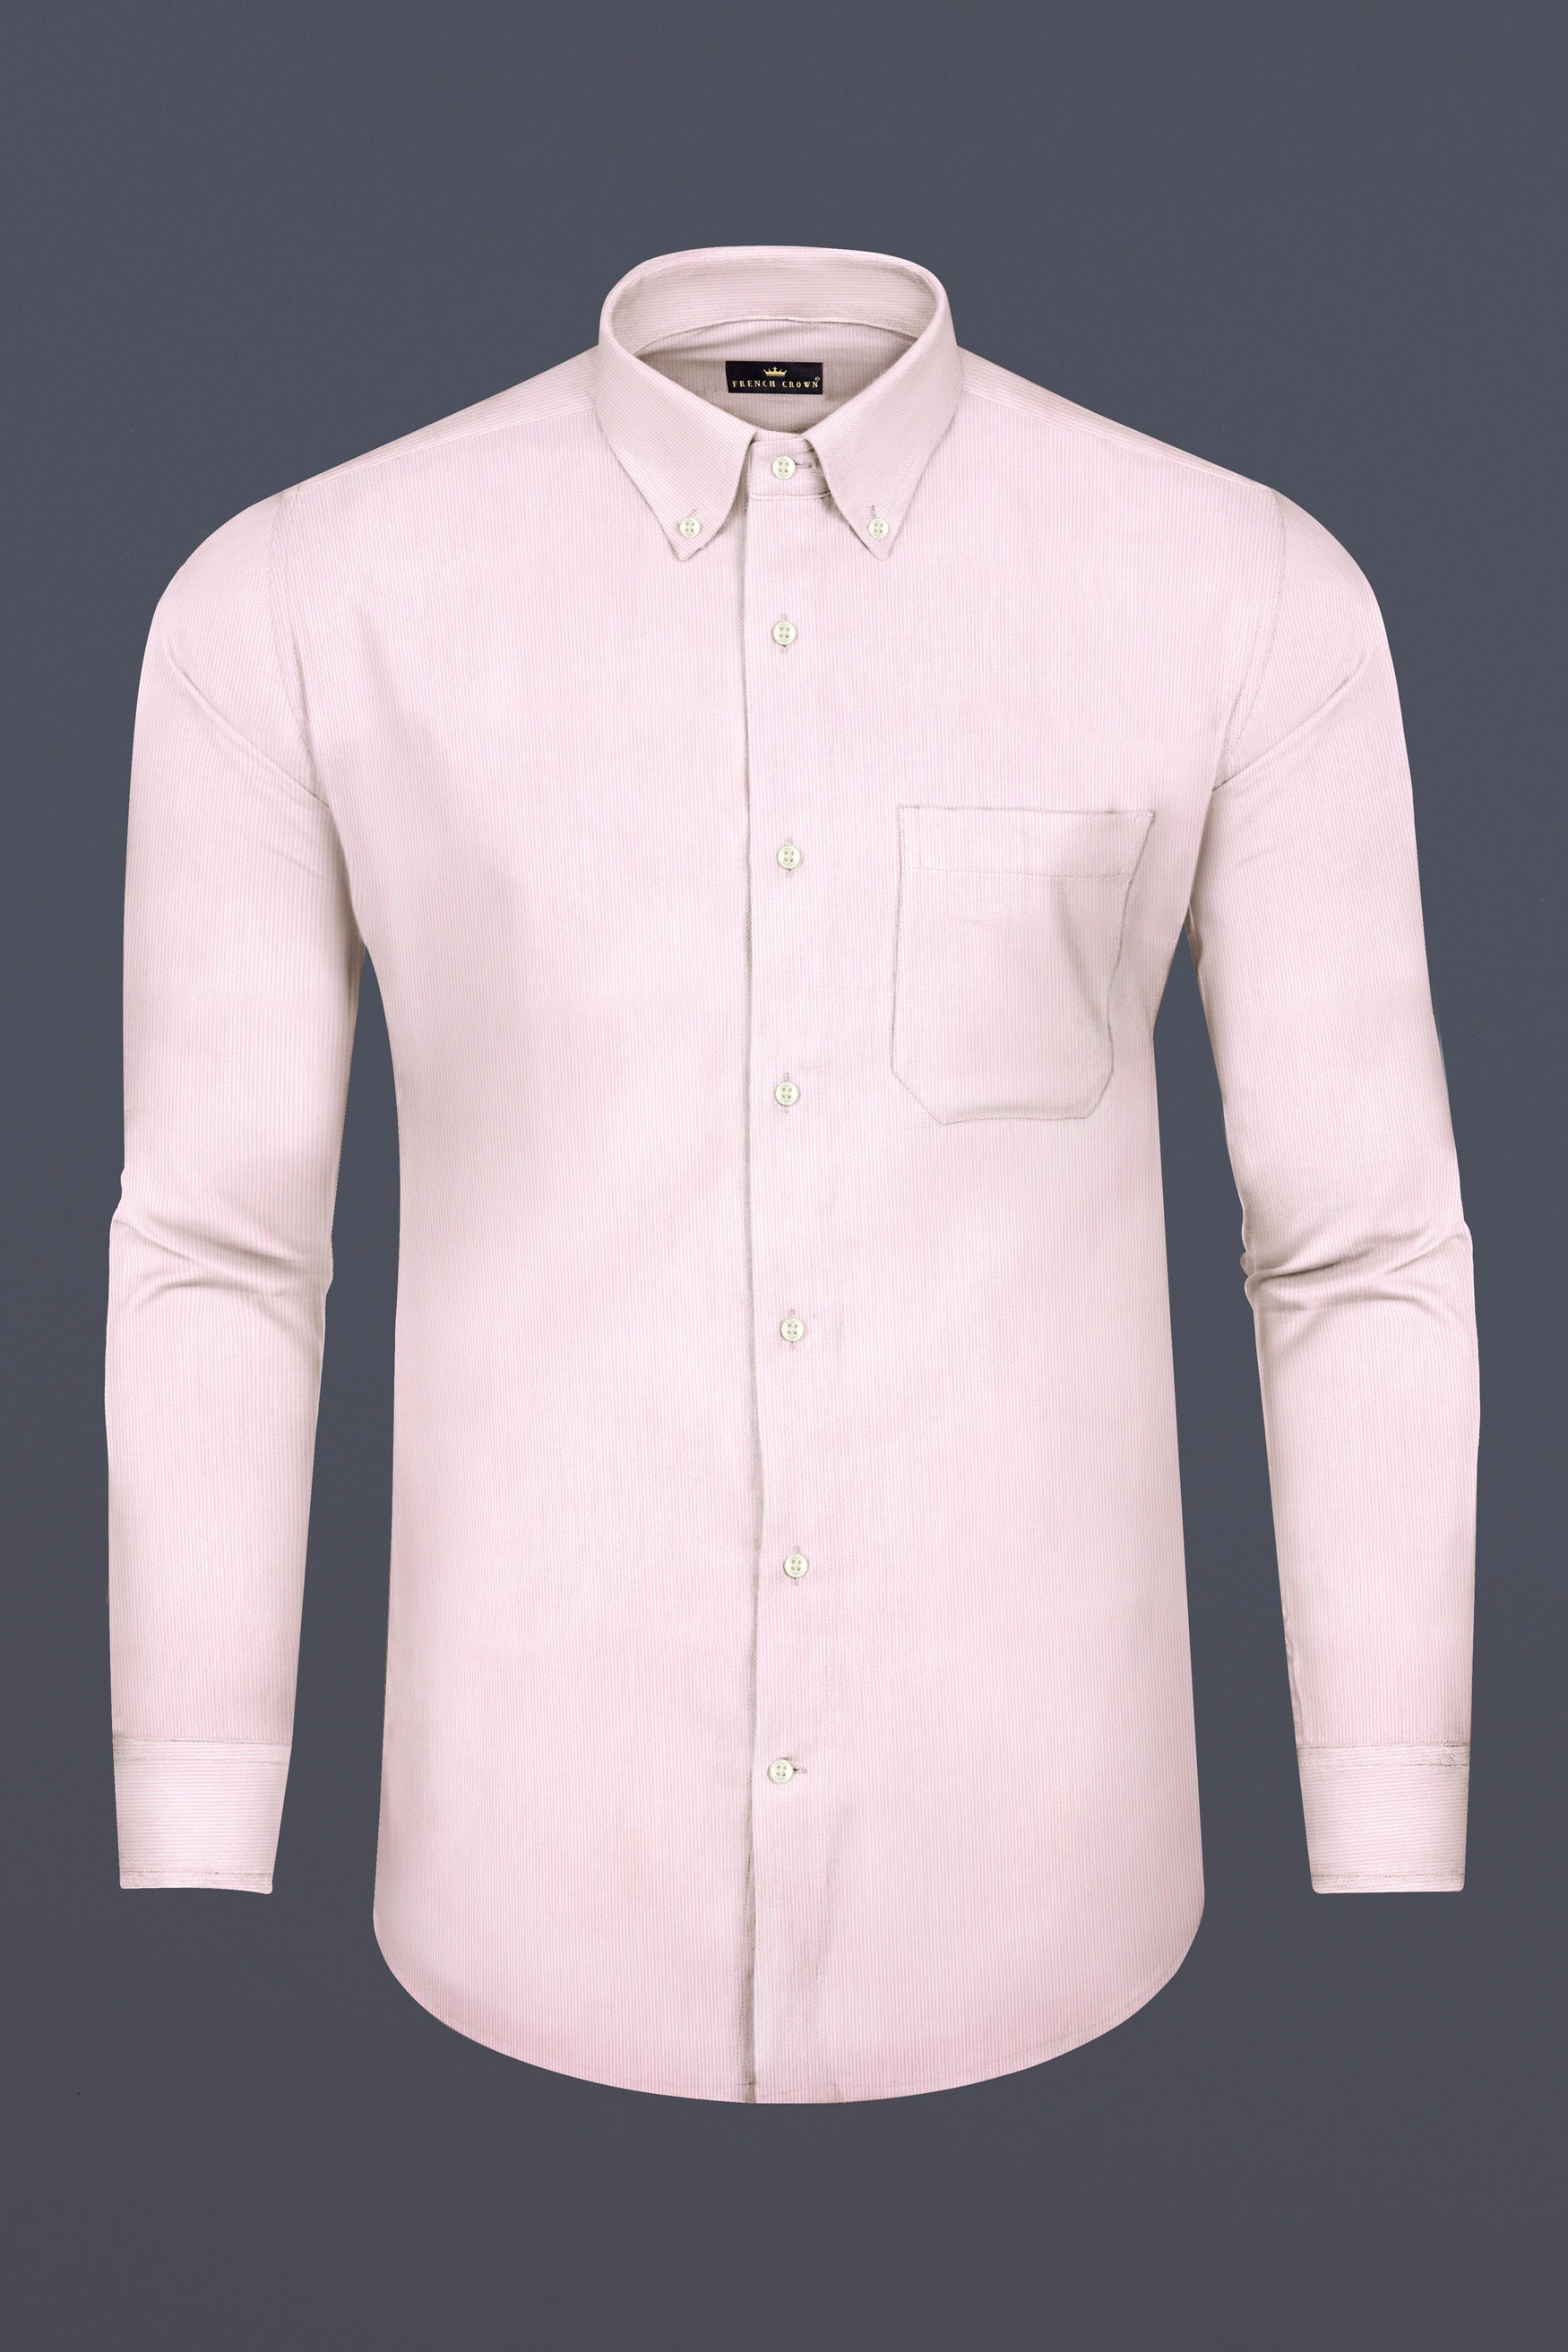 Pippin Pink Pin Striped Premium Cotton Shirt